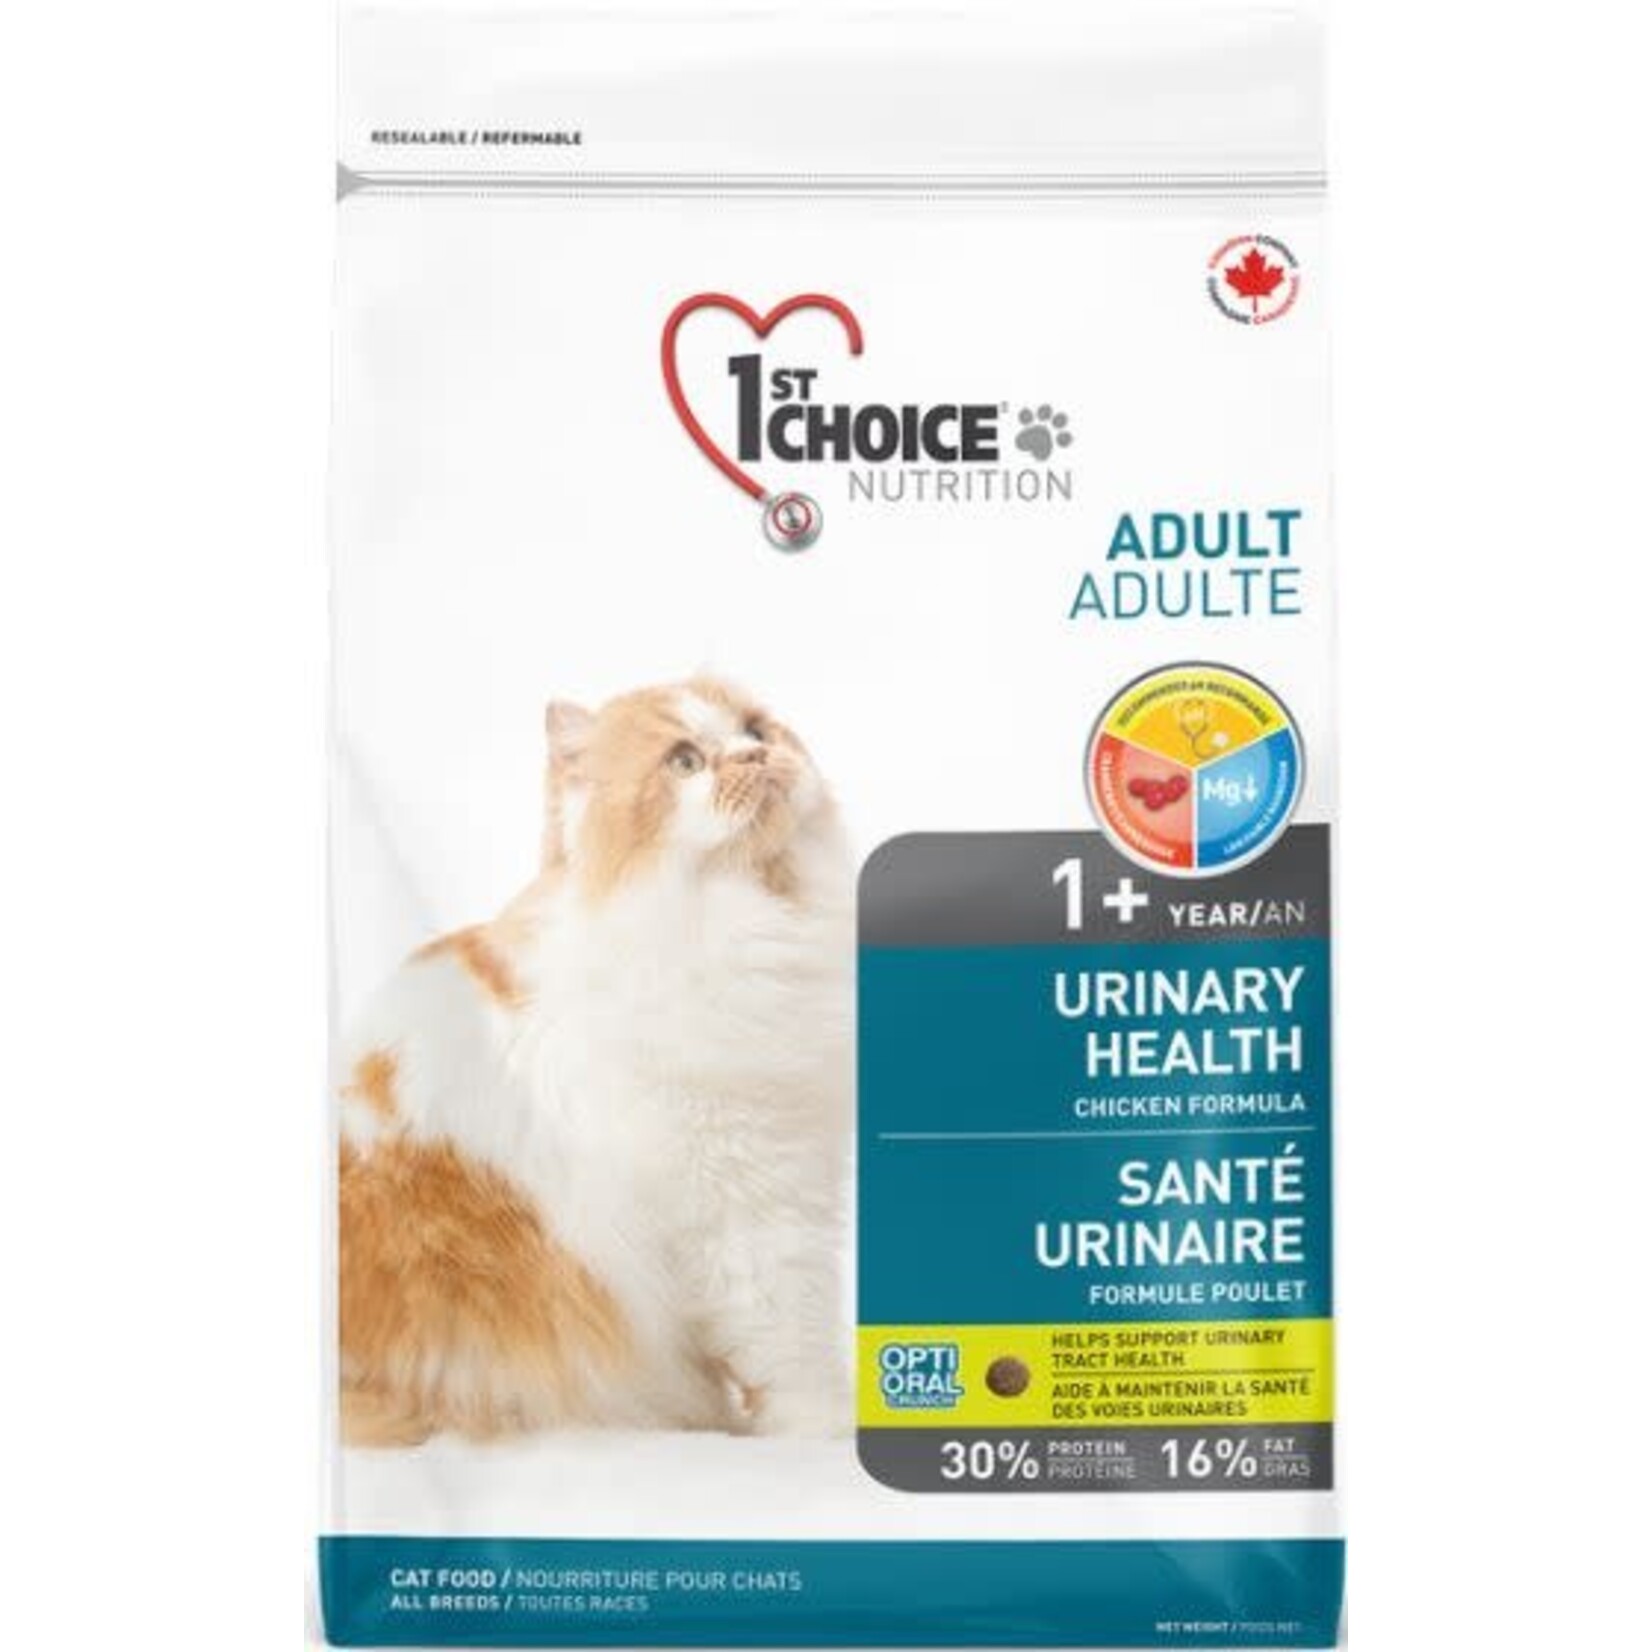 1st Choice Adult Urinary Health Dry Cat Food